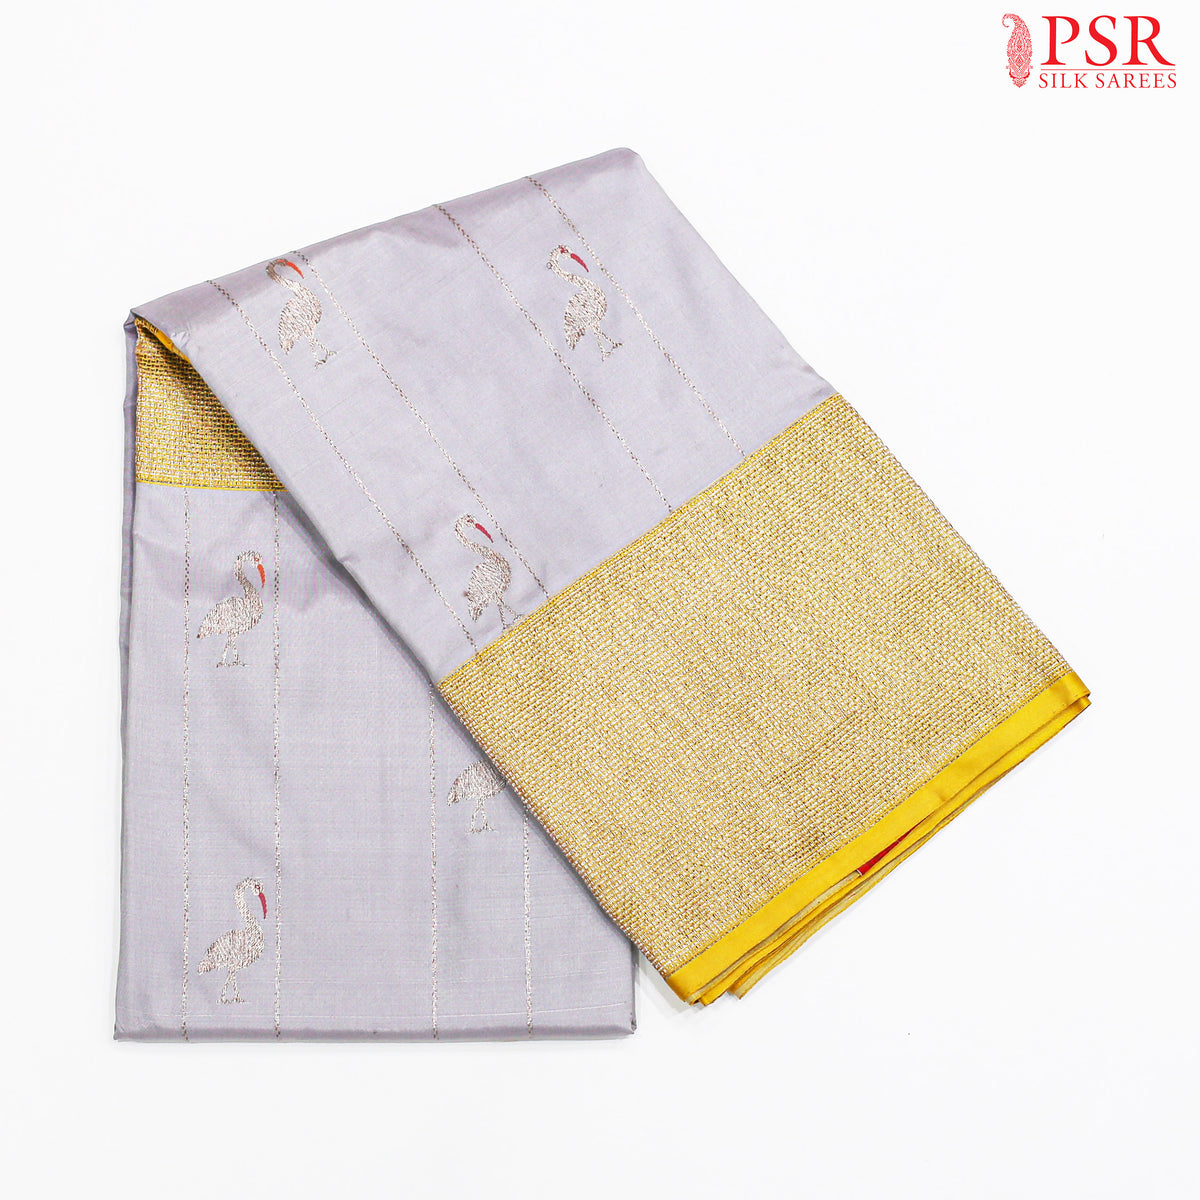 PSR Silks Presents Lavender Grey Colored Pure Banaras Silk Saree With a Combination of Yellow Colors. Saree Has Soft Neem Zari Strips With Flamingo Motifs.